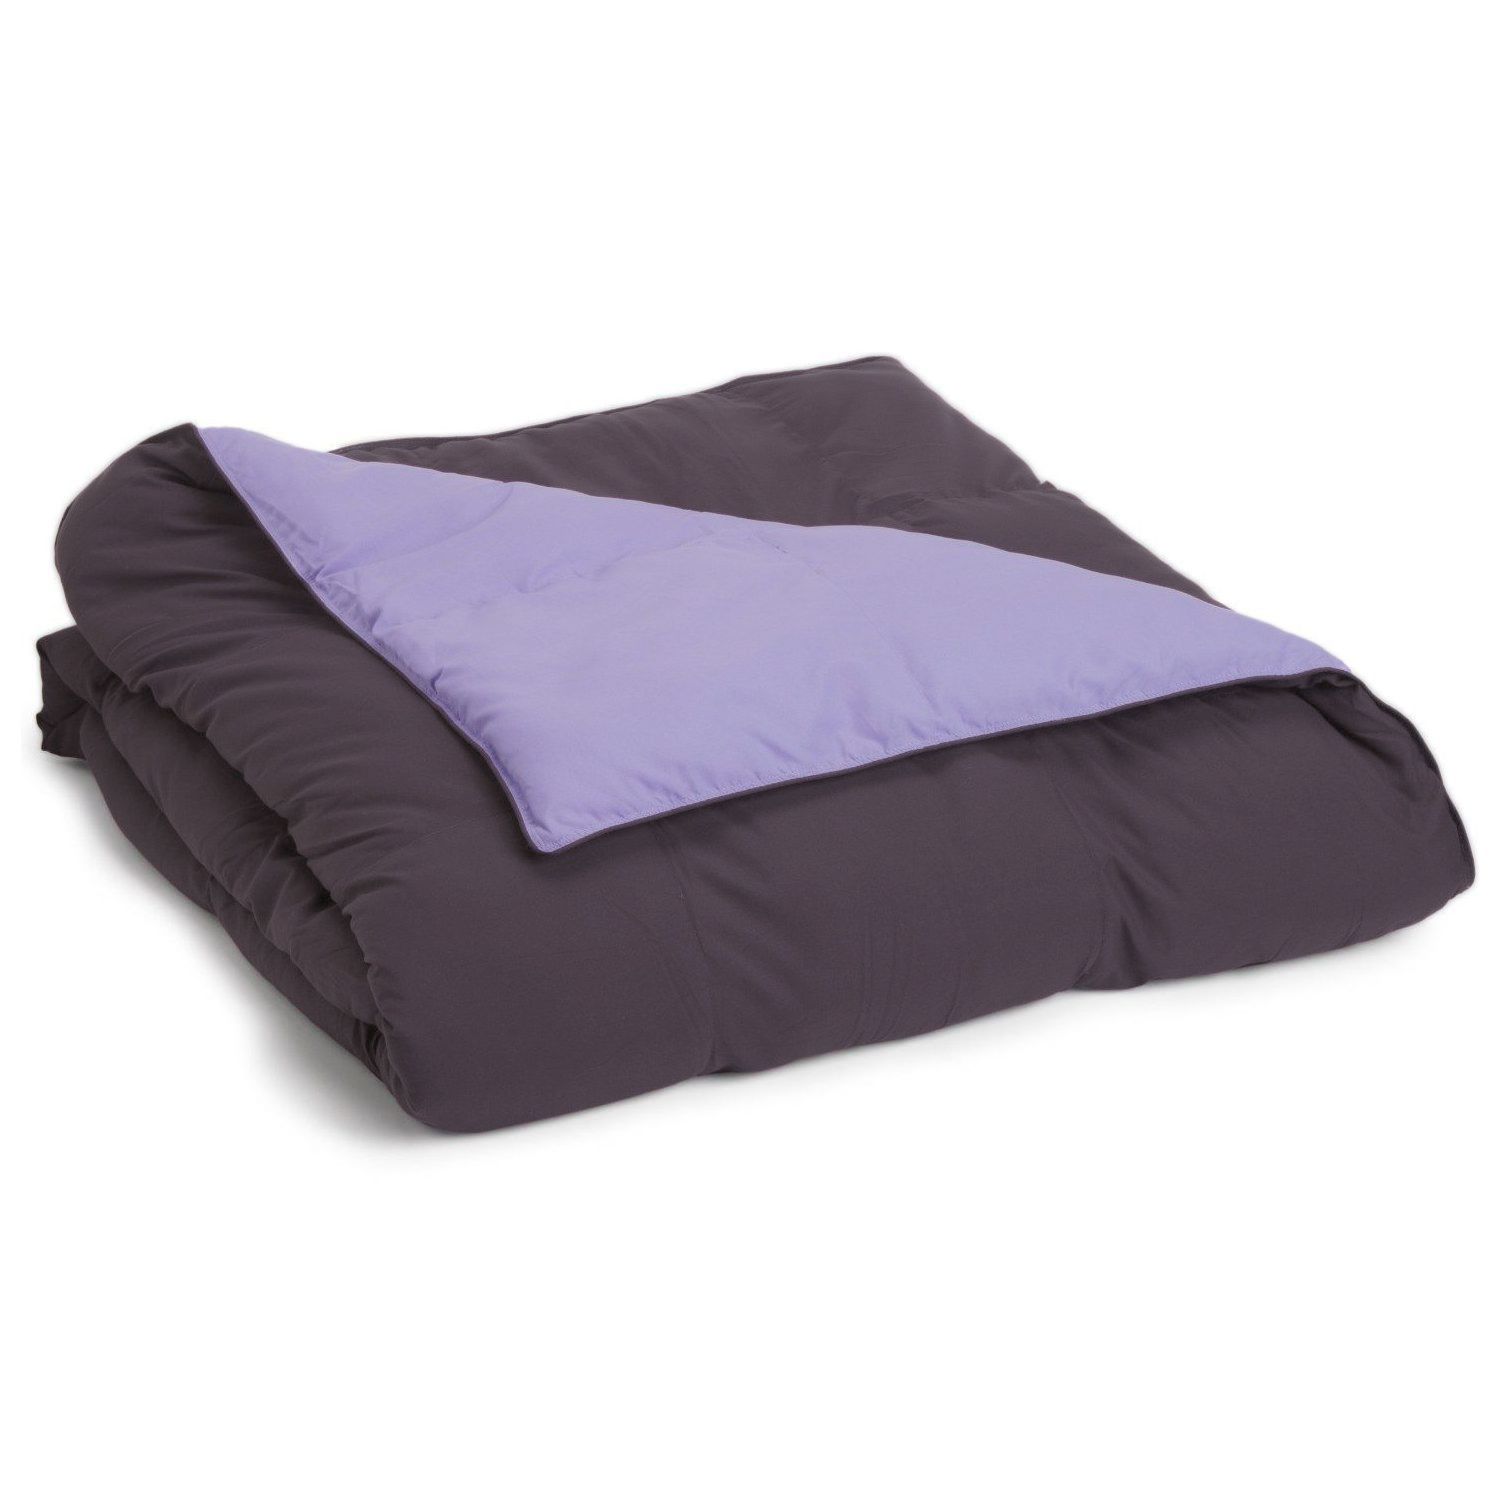 Superior Down Alternative Reversible Comforter, Full/ Queen, Plum/ Lilac - image 1 of 3